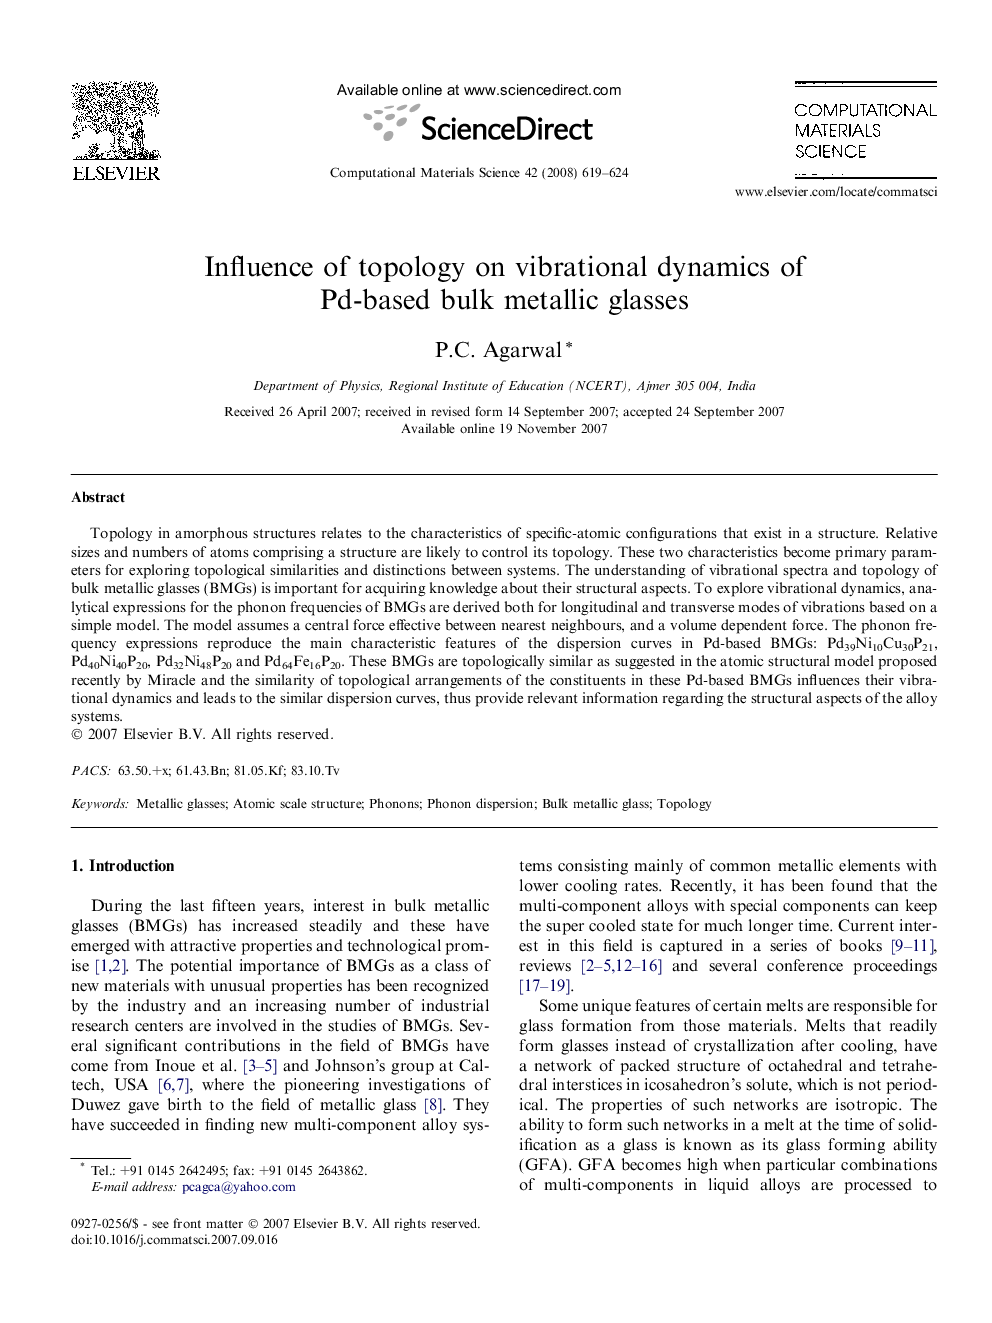 Influence of topology on vibrational dynamics of Pd-based bulk metallic glasses